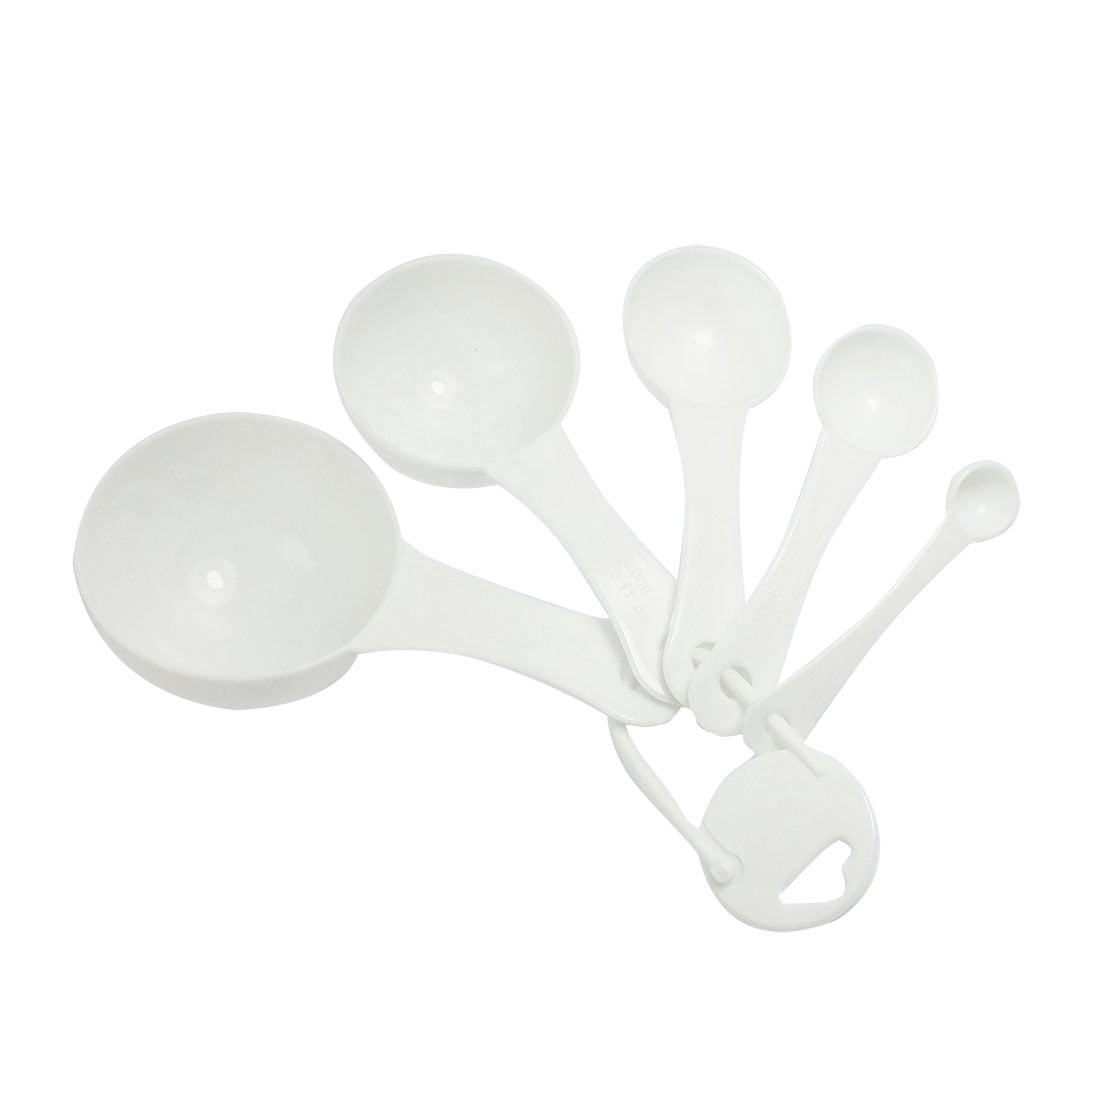 Kitchen 1ml 5ml 15ml 50ml 100ml White Plastic Measure Spoon Set